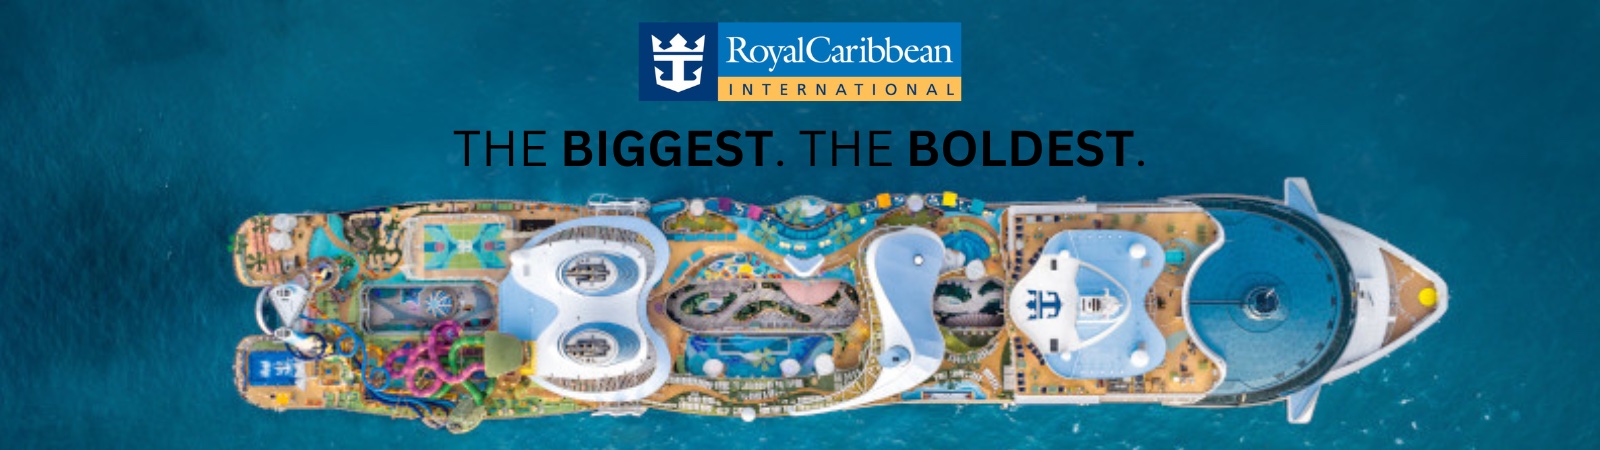 Royal Caribbean Banner